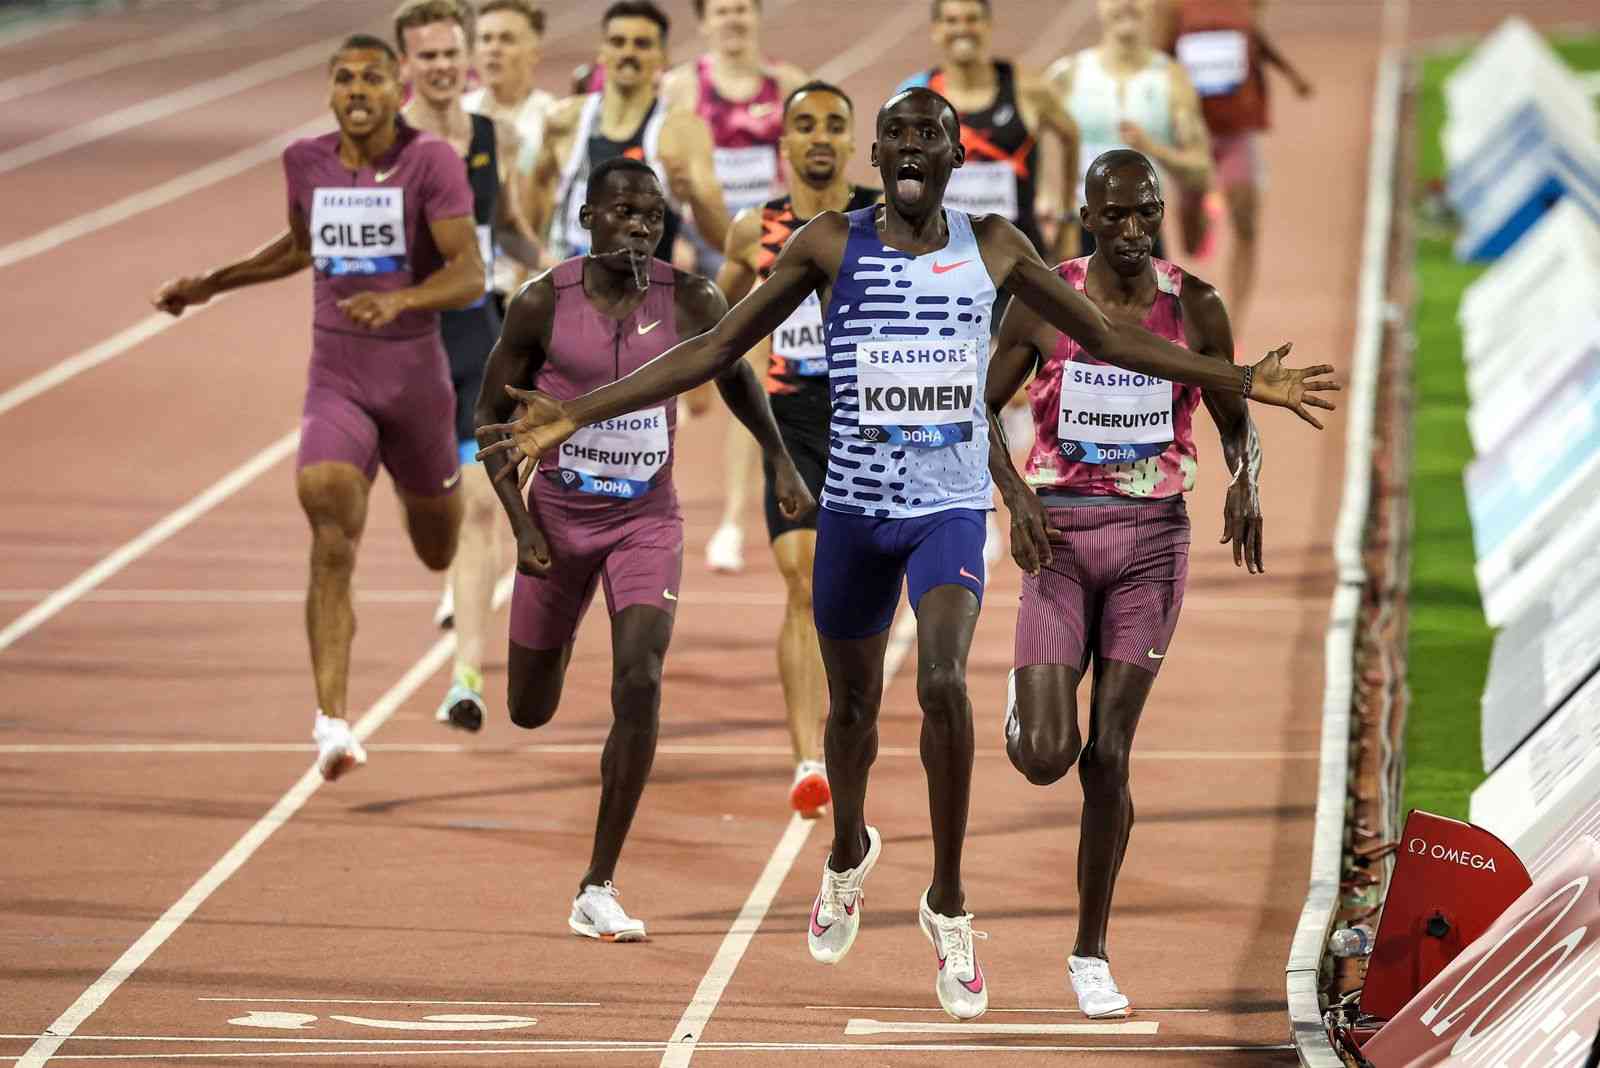 Komen stuns former World Champion Cheruiyot to win 1500m in Doha